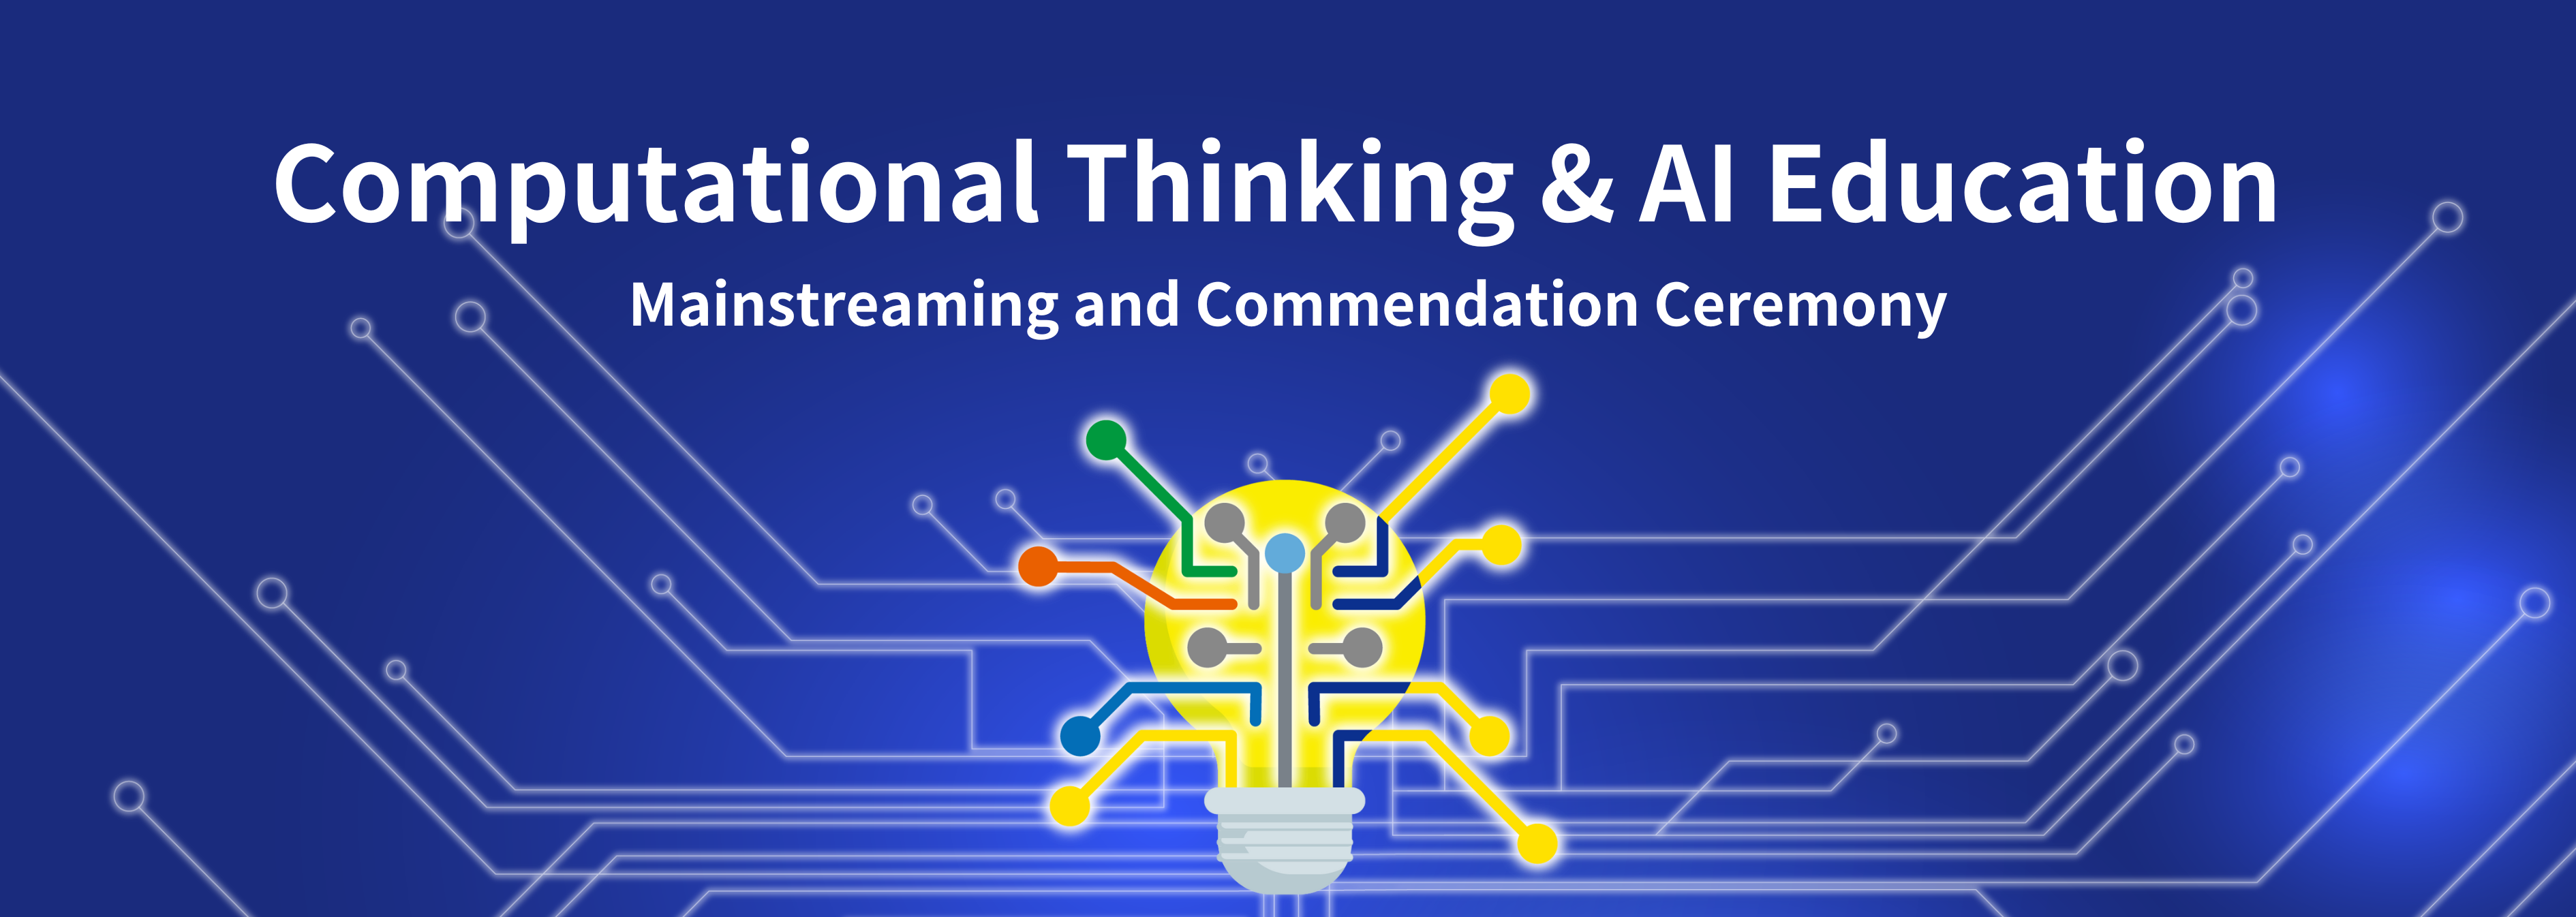 Computational Thinking & AI Education